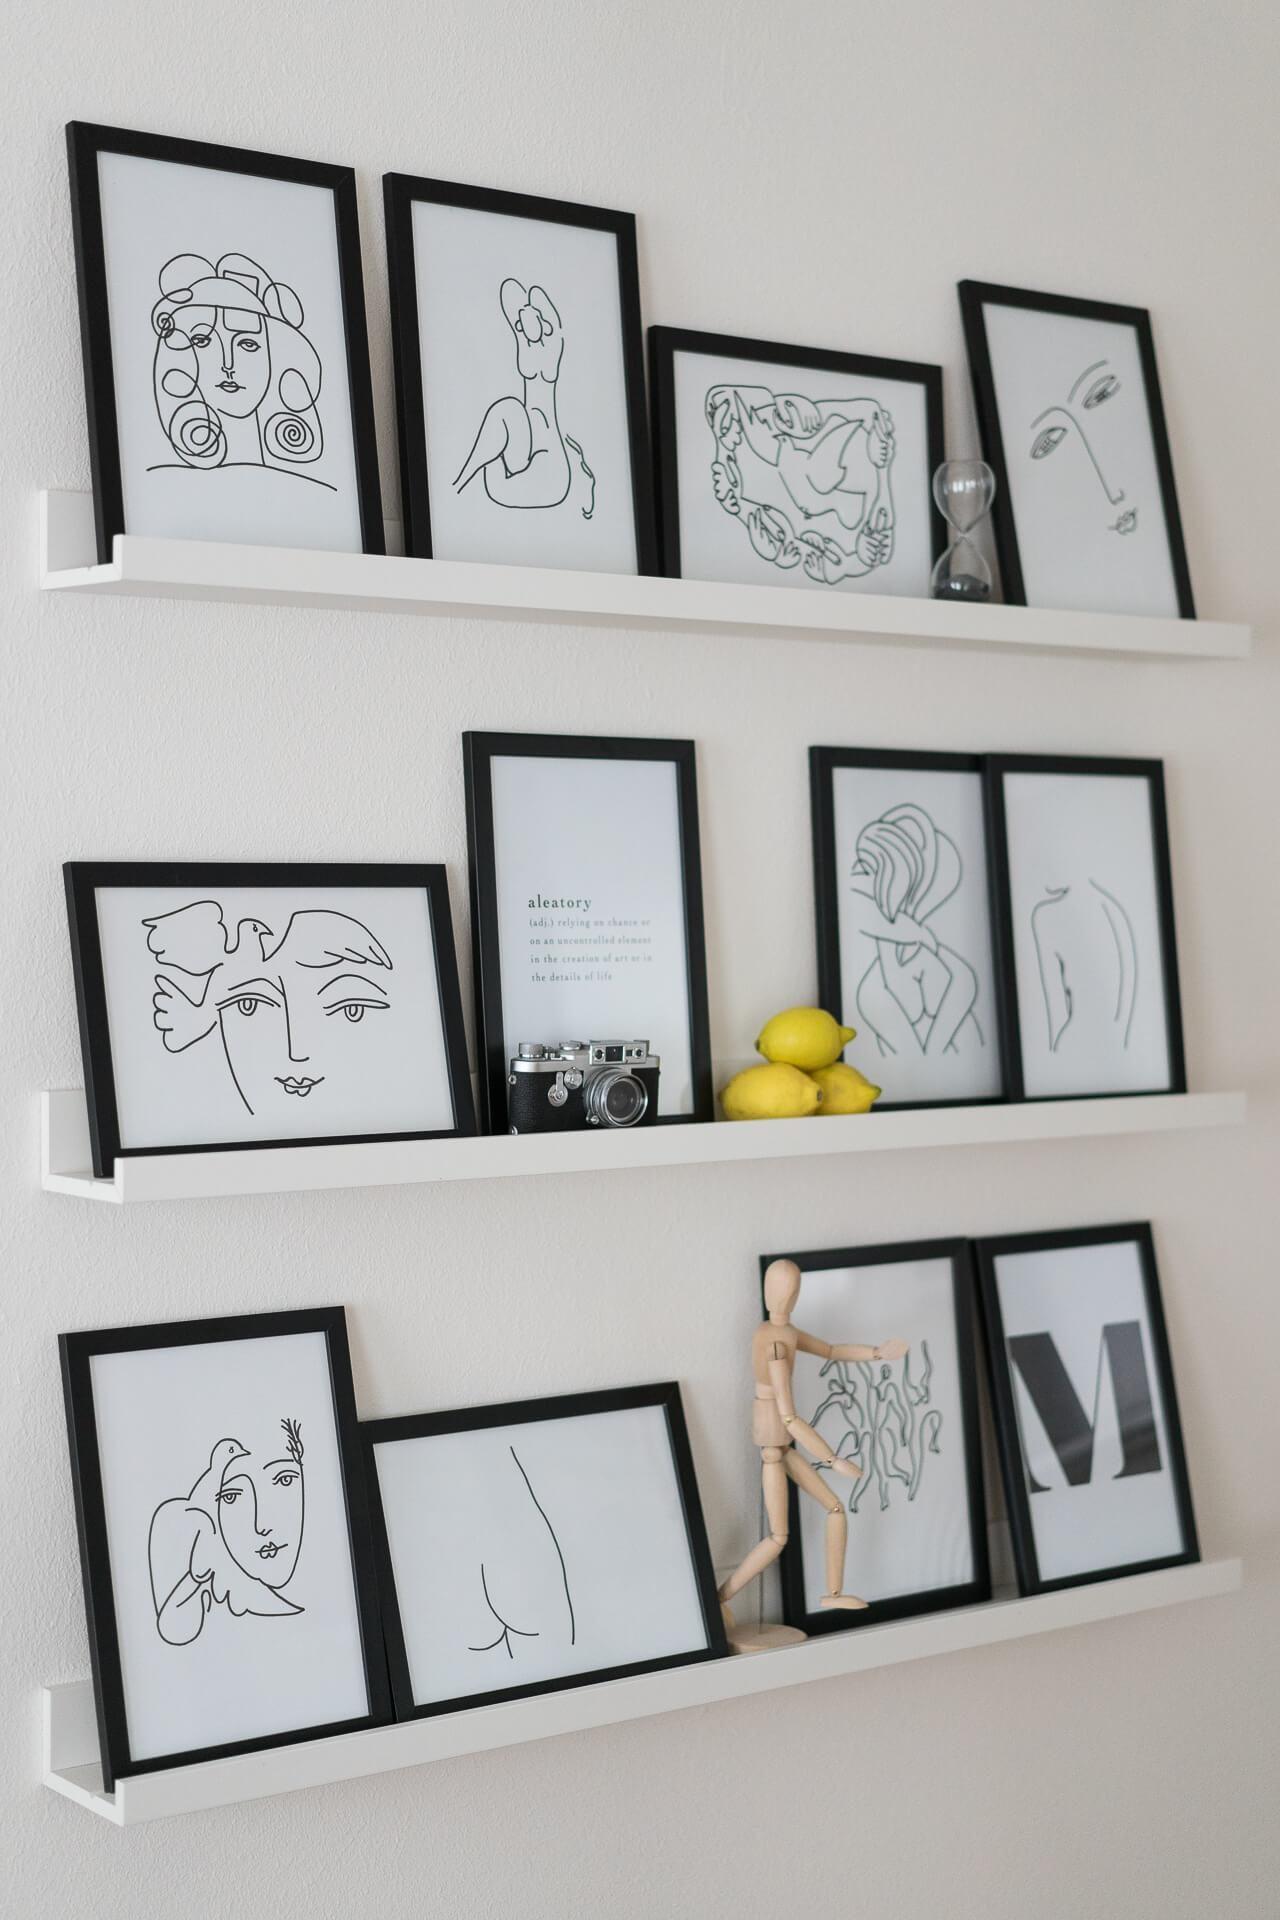 Unsere Gallery Wall mit selbst gemachten Lineart-Prints
#homestory #wohnzimmer #lineart #gallerywall #diy